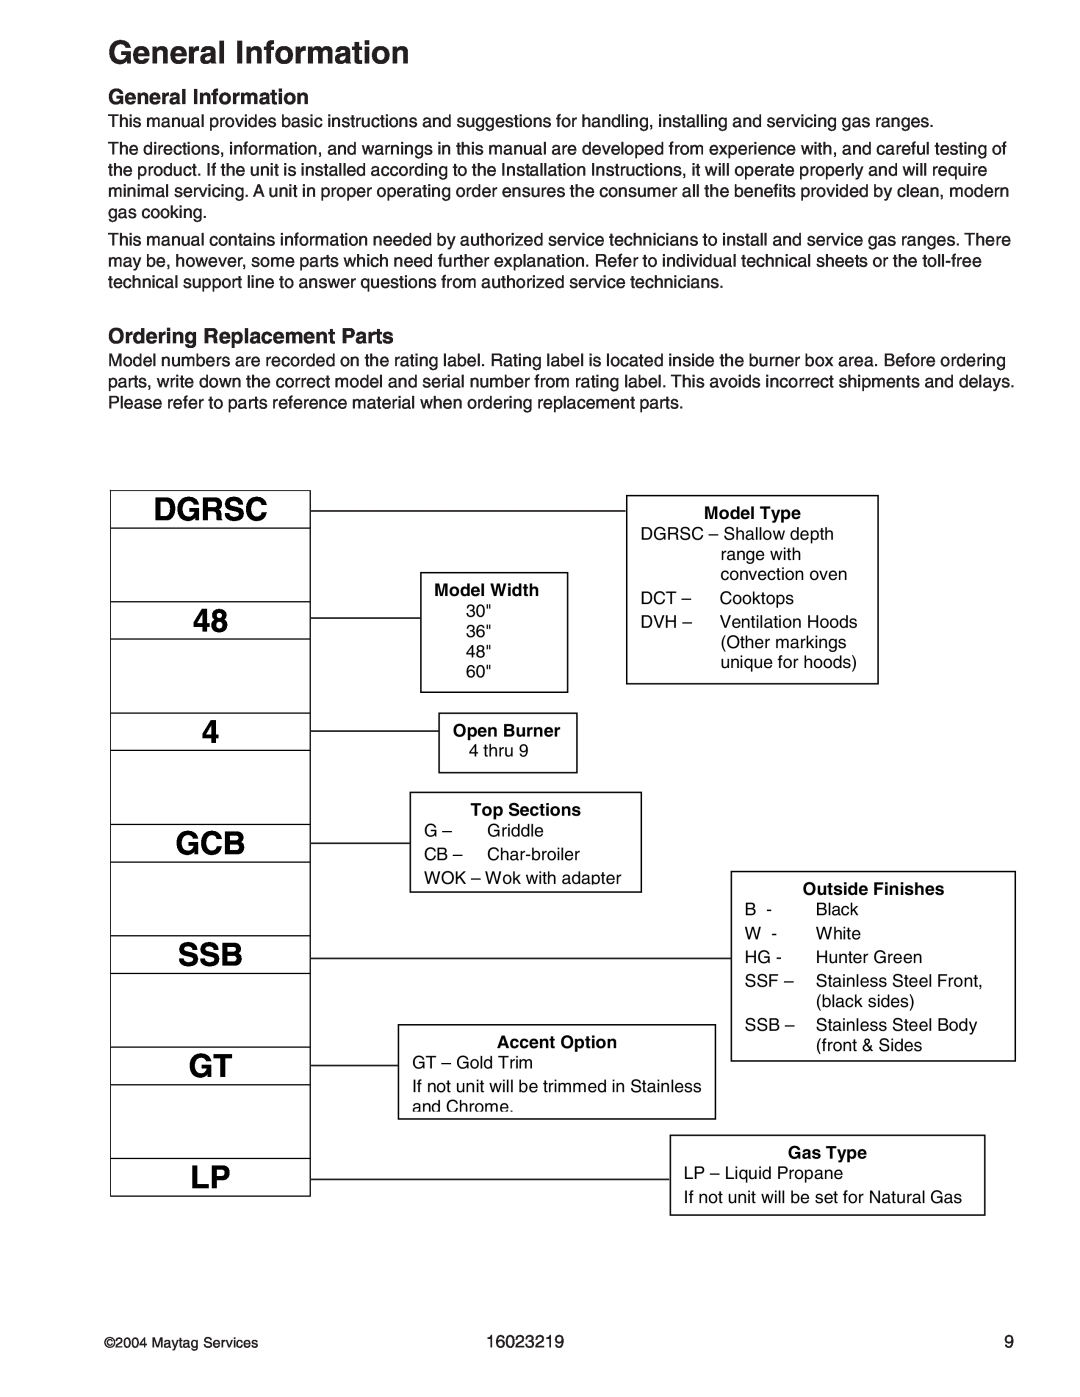 Maytag DGRSC General Information, Dgrsc, Gcb Ssb Gt, Ordering Replacement Parts, Model Width, Open Burner, Model Type 